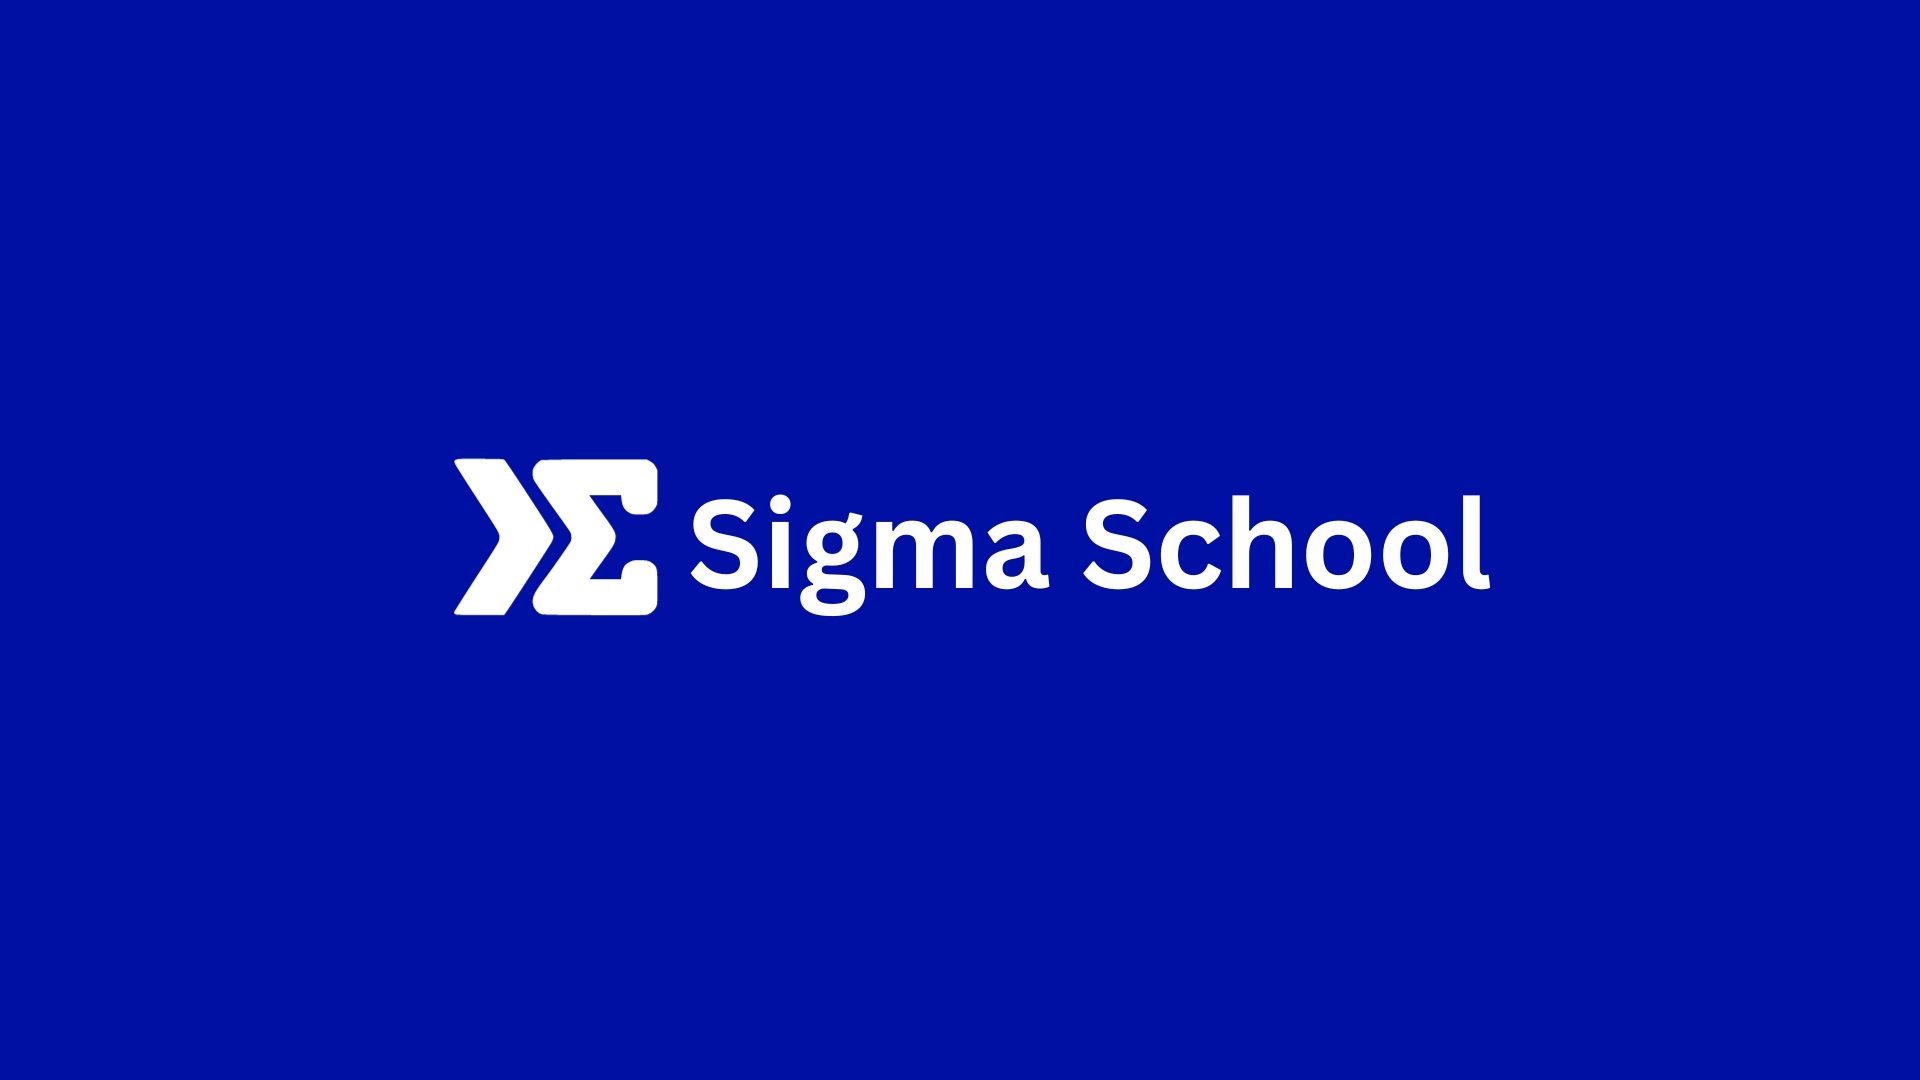 Sigma School Image 1